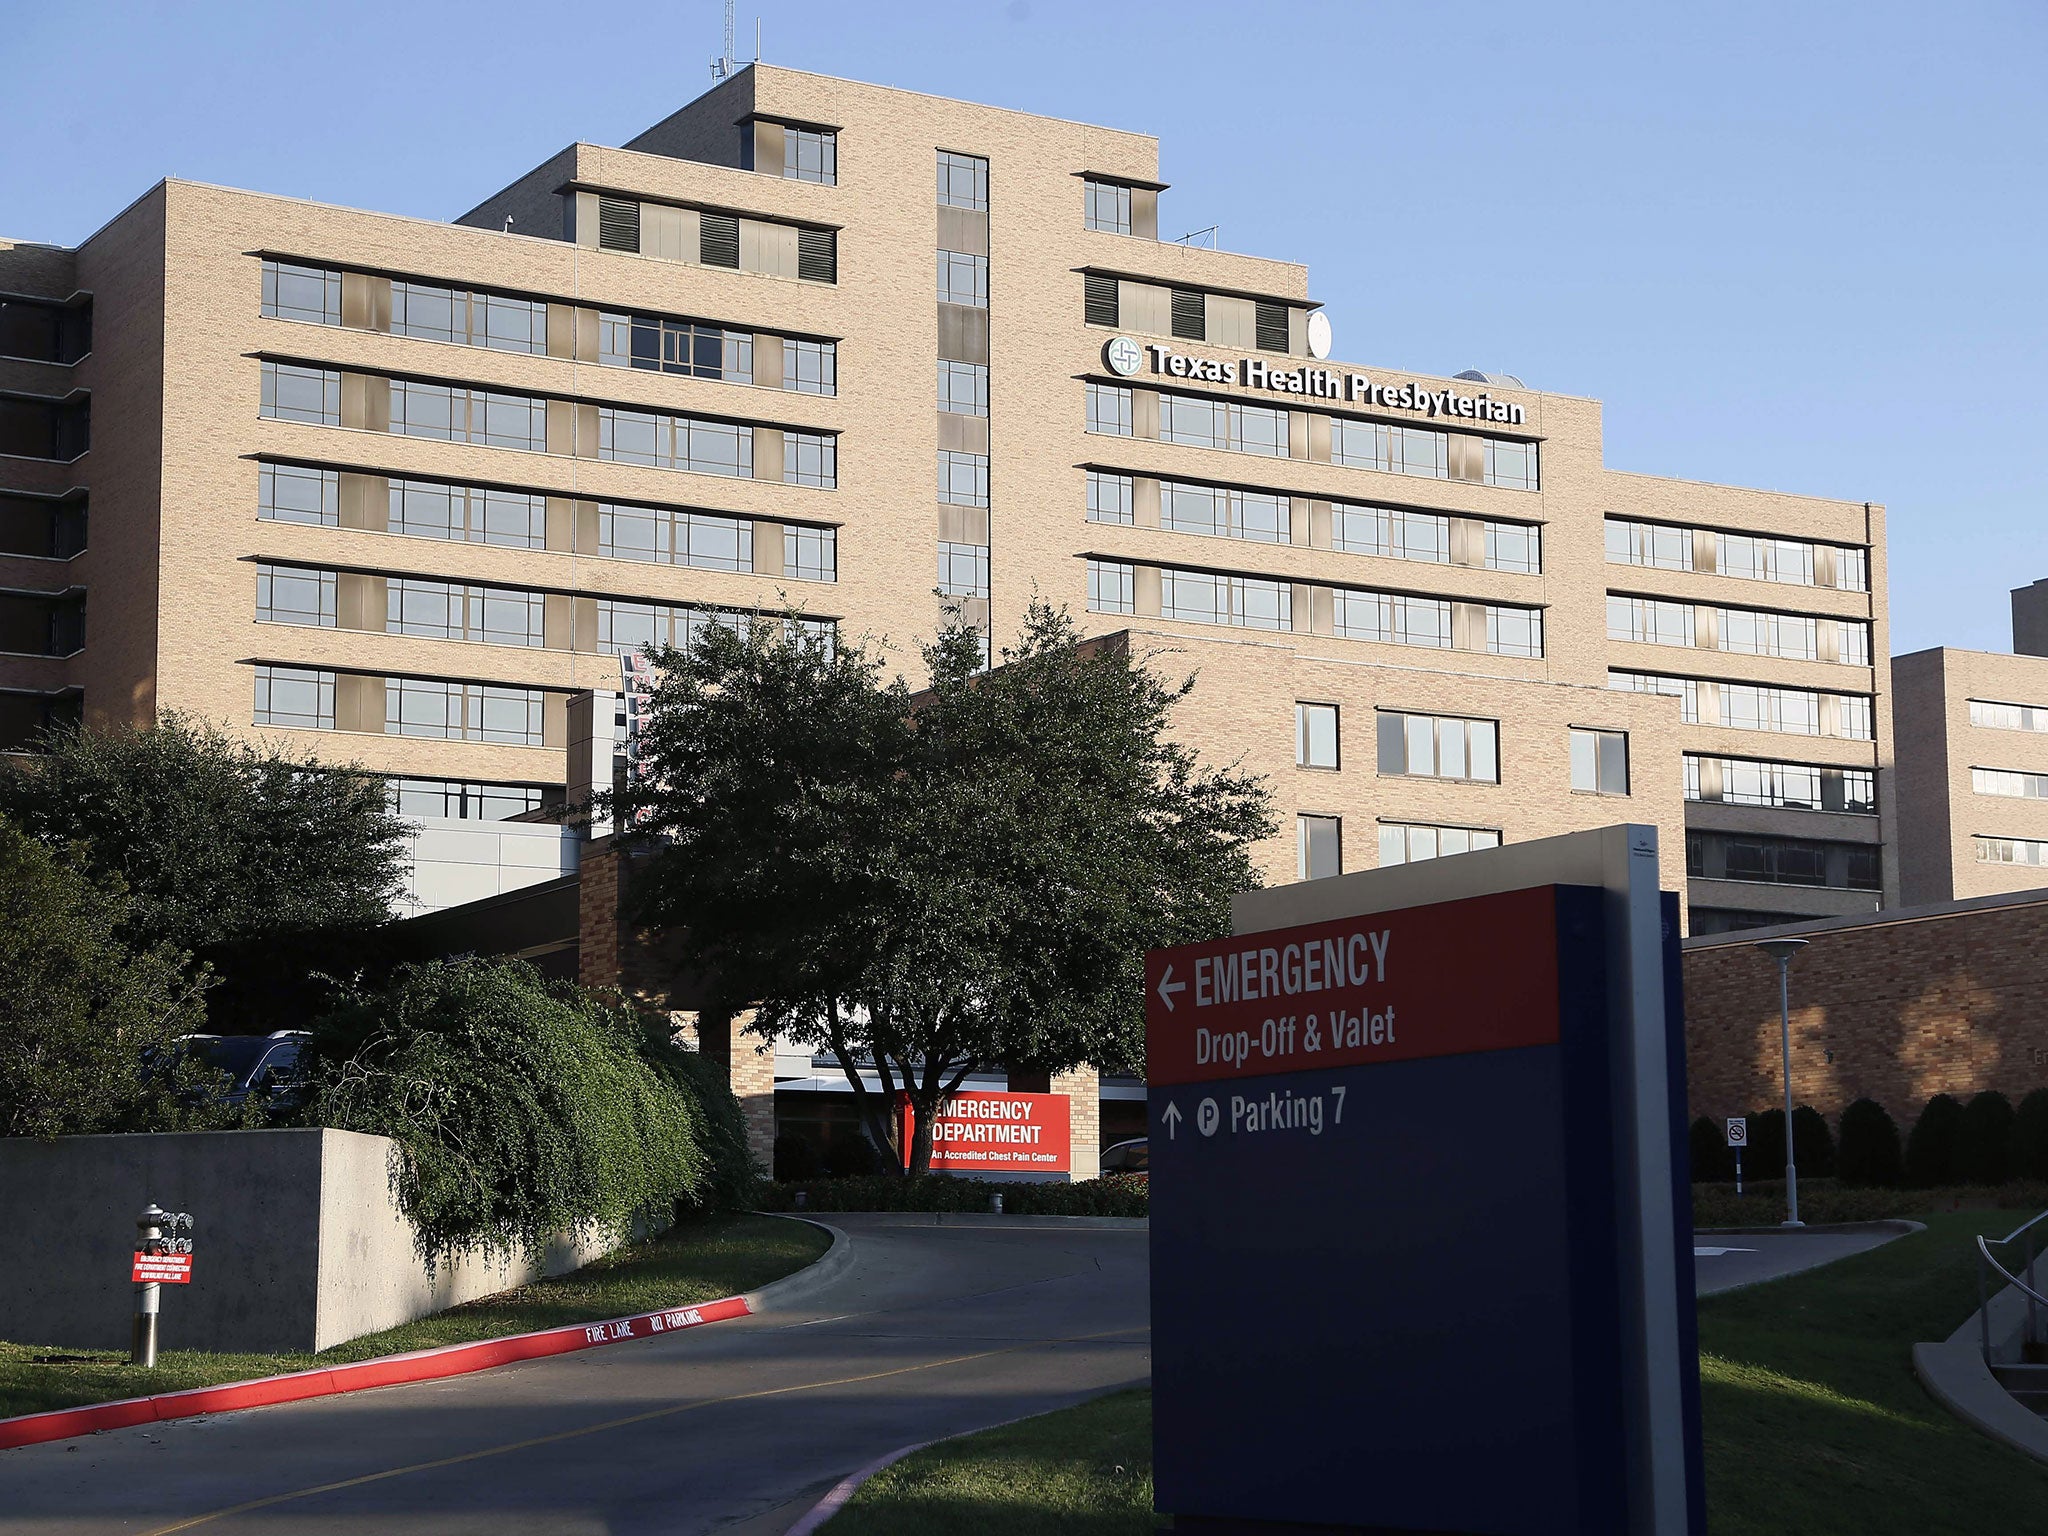 The emergency entrance to Texas Health Presbyterian hospital